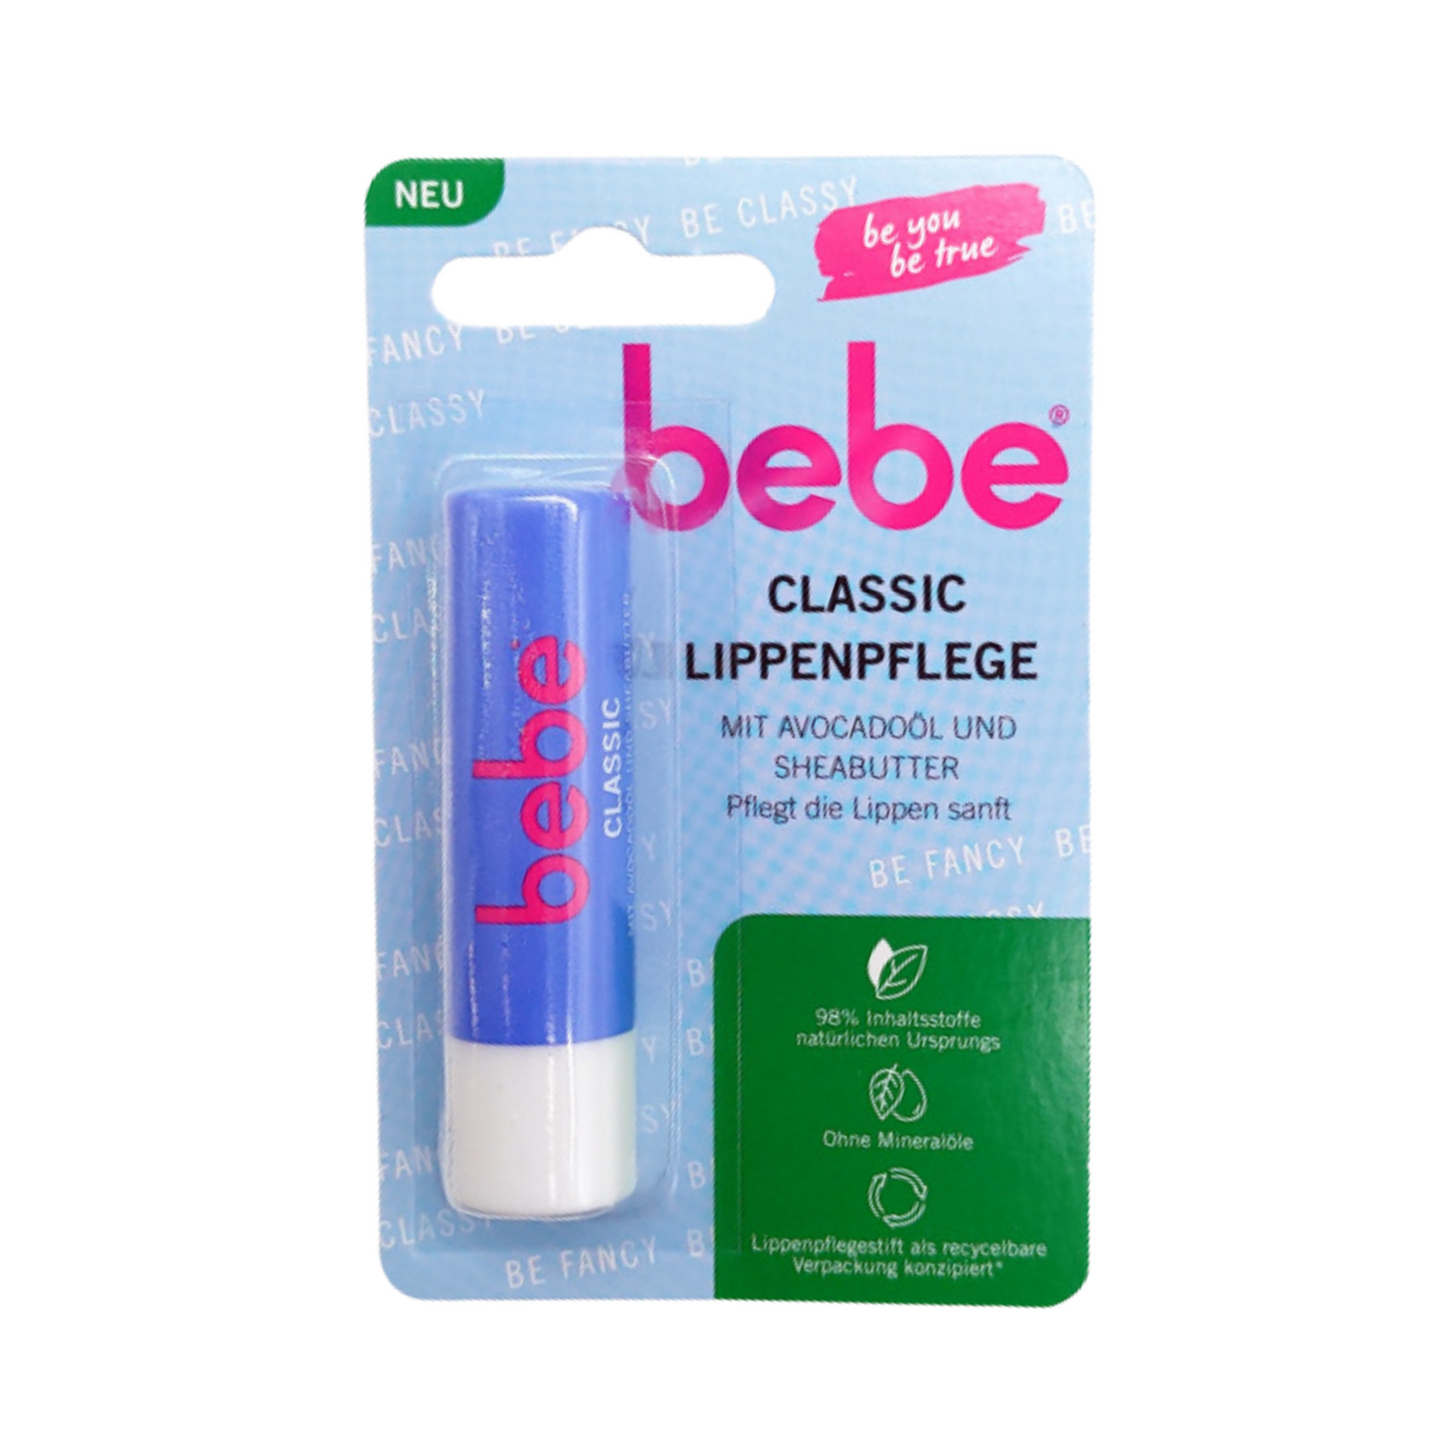 Primary Image of Bebe Classic Lip Balm